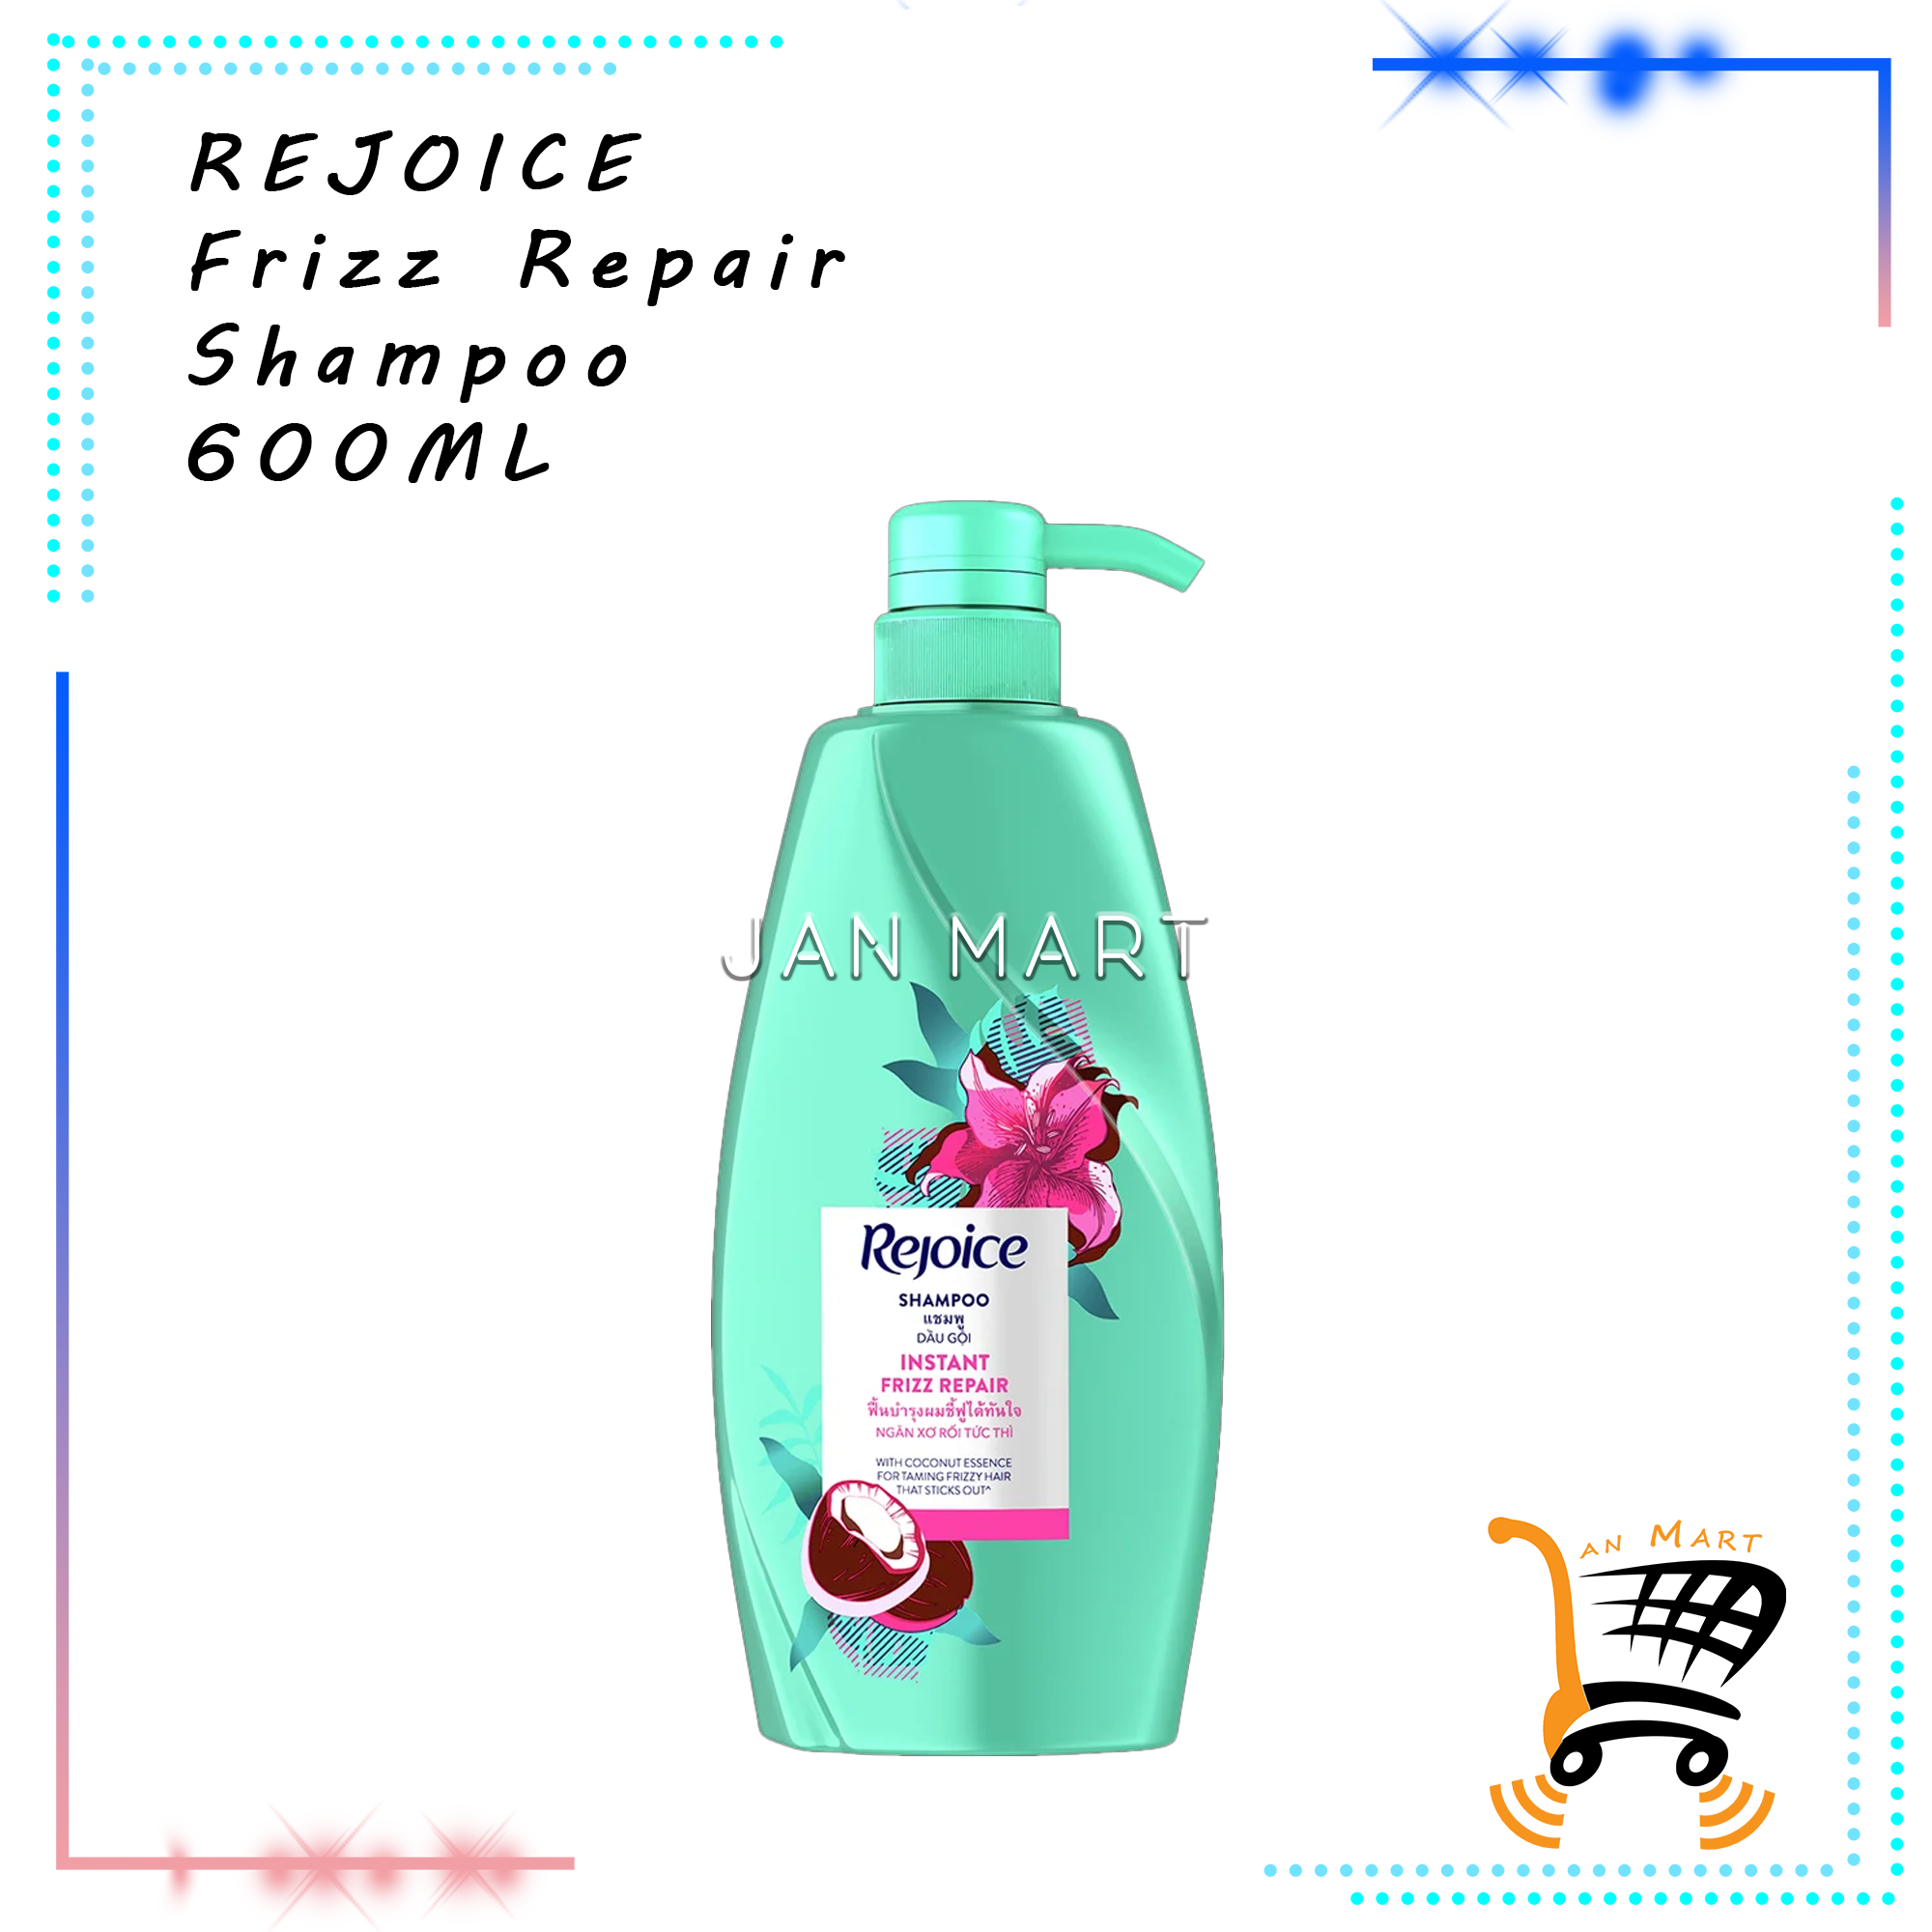 REJOICE Shampoo 600ML